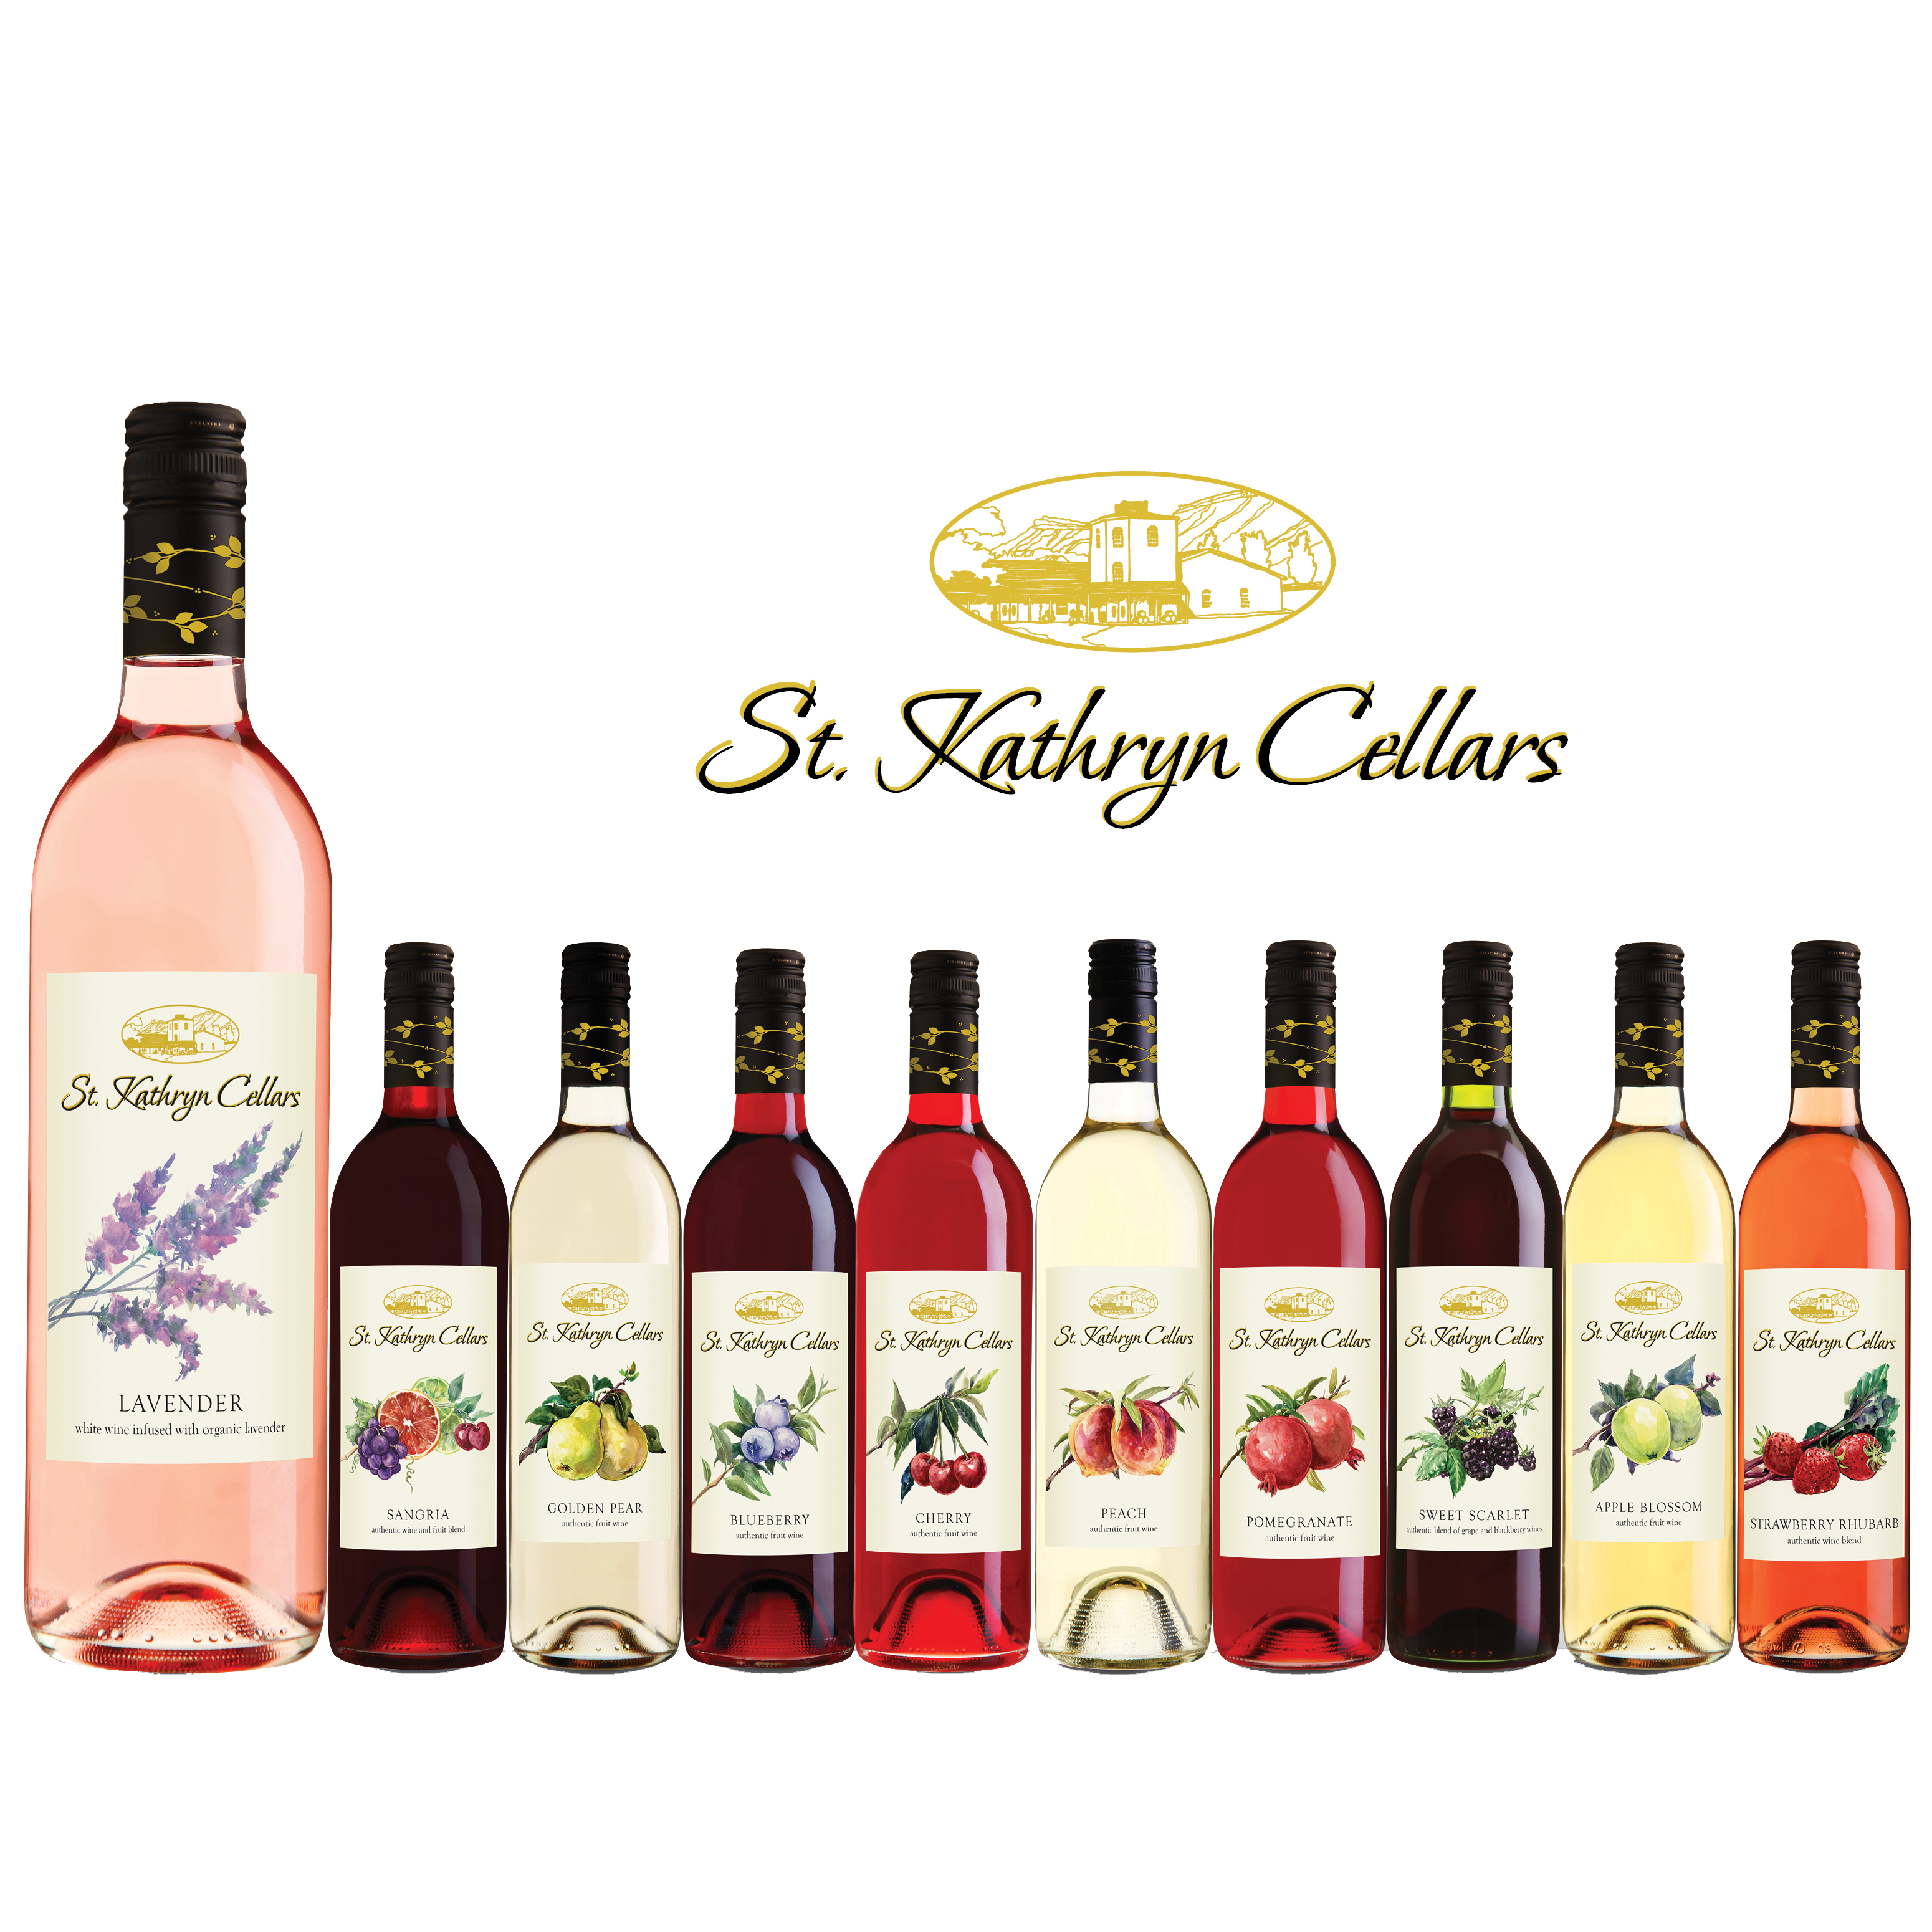 St. Kathryn Cellars bottles